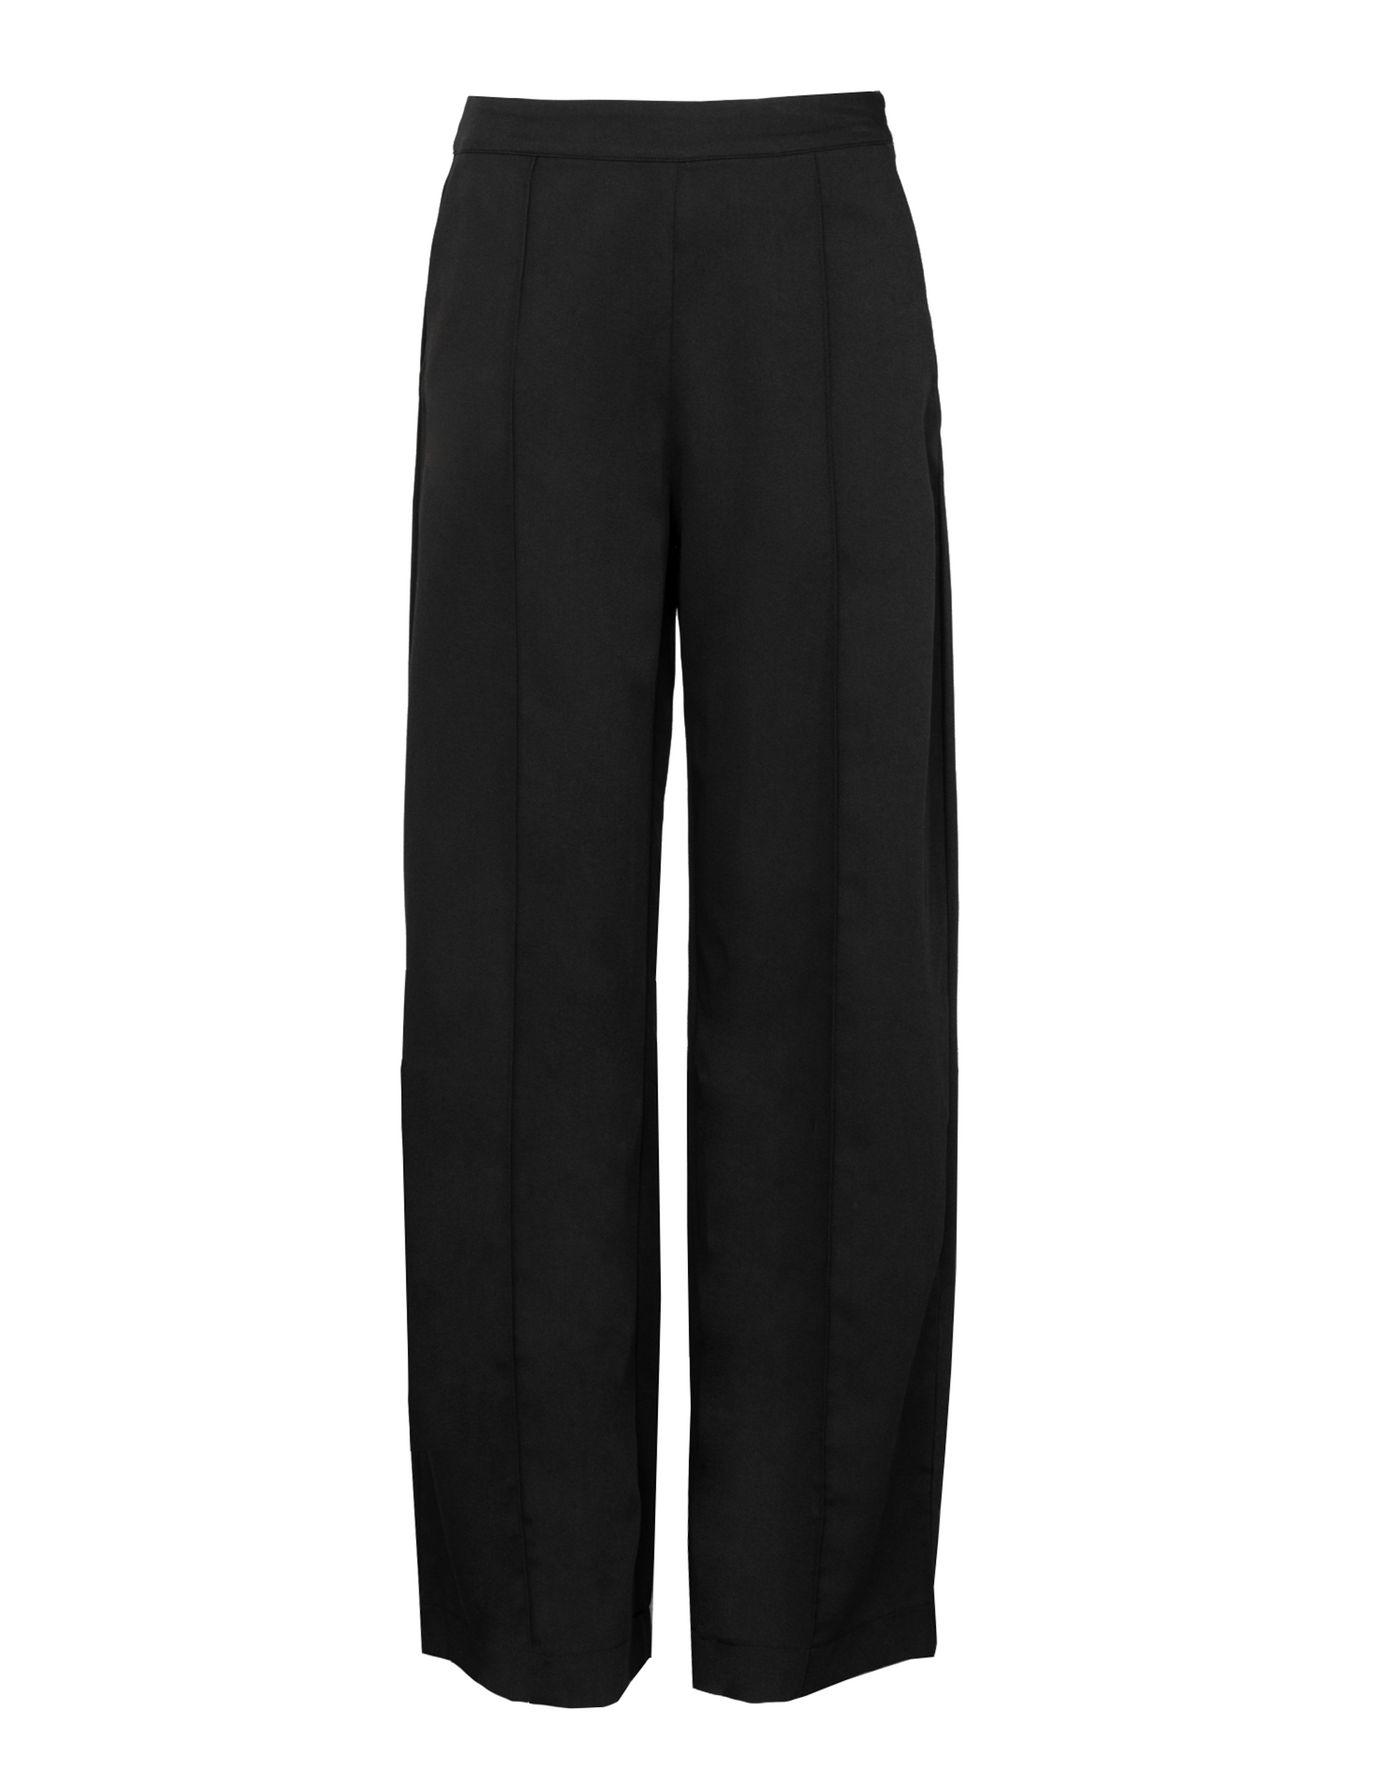 Cartea Pants (Black) - Wide Leg Pants - Women's Pant - Charcoal Clothing